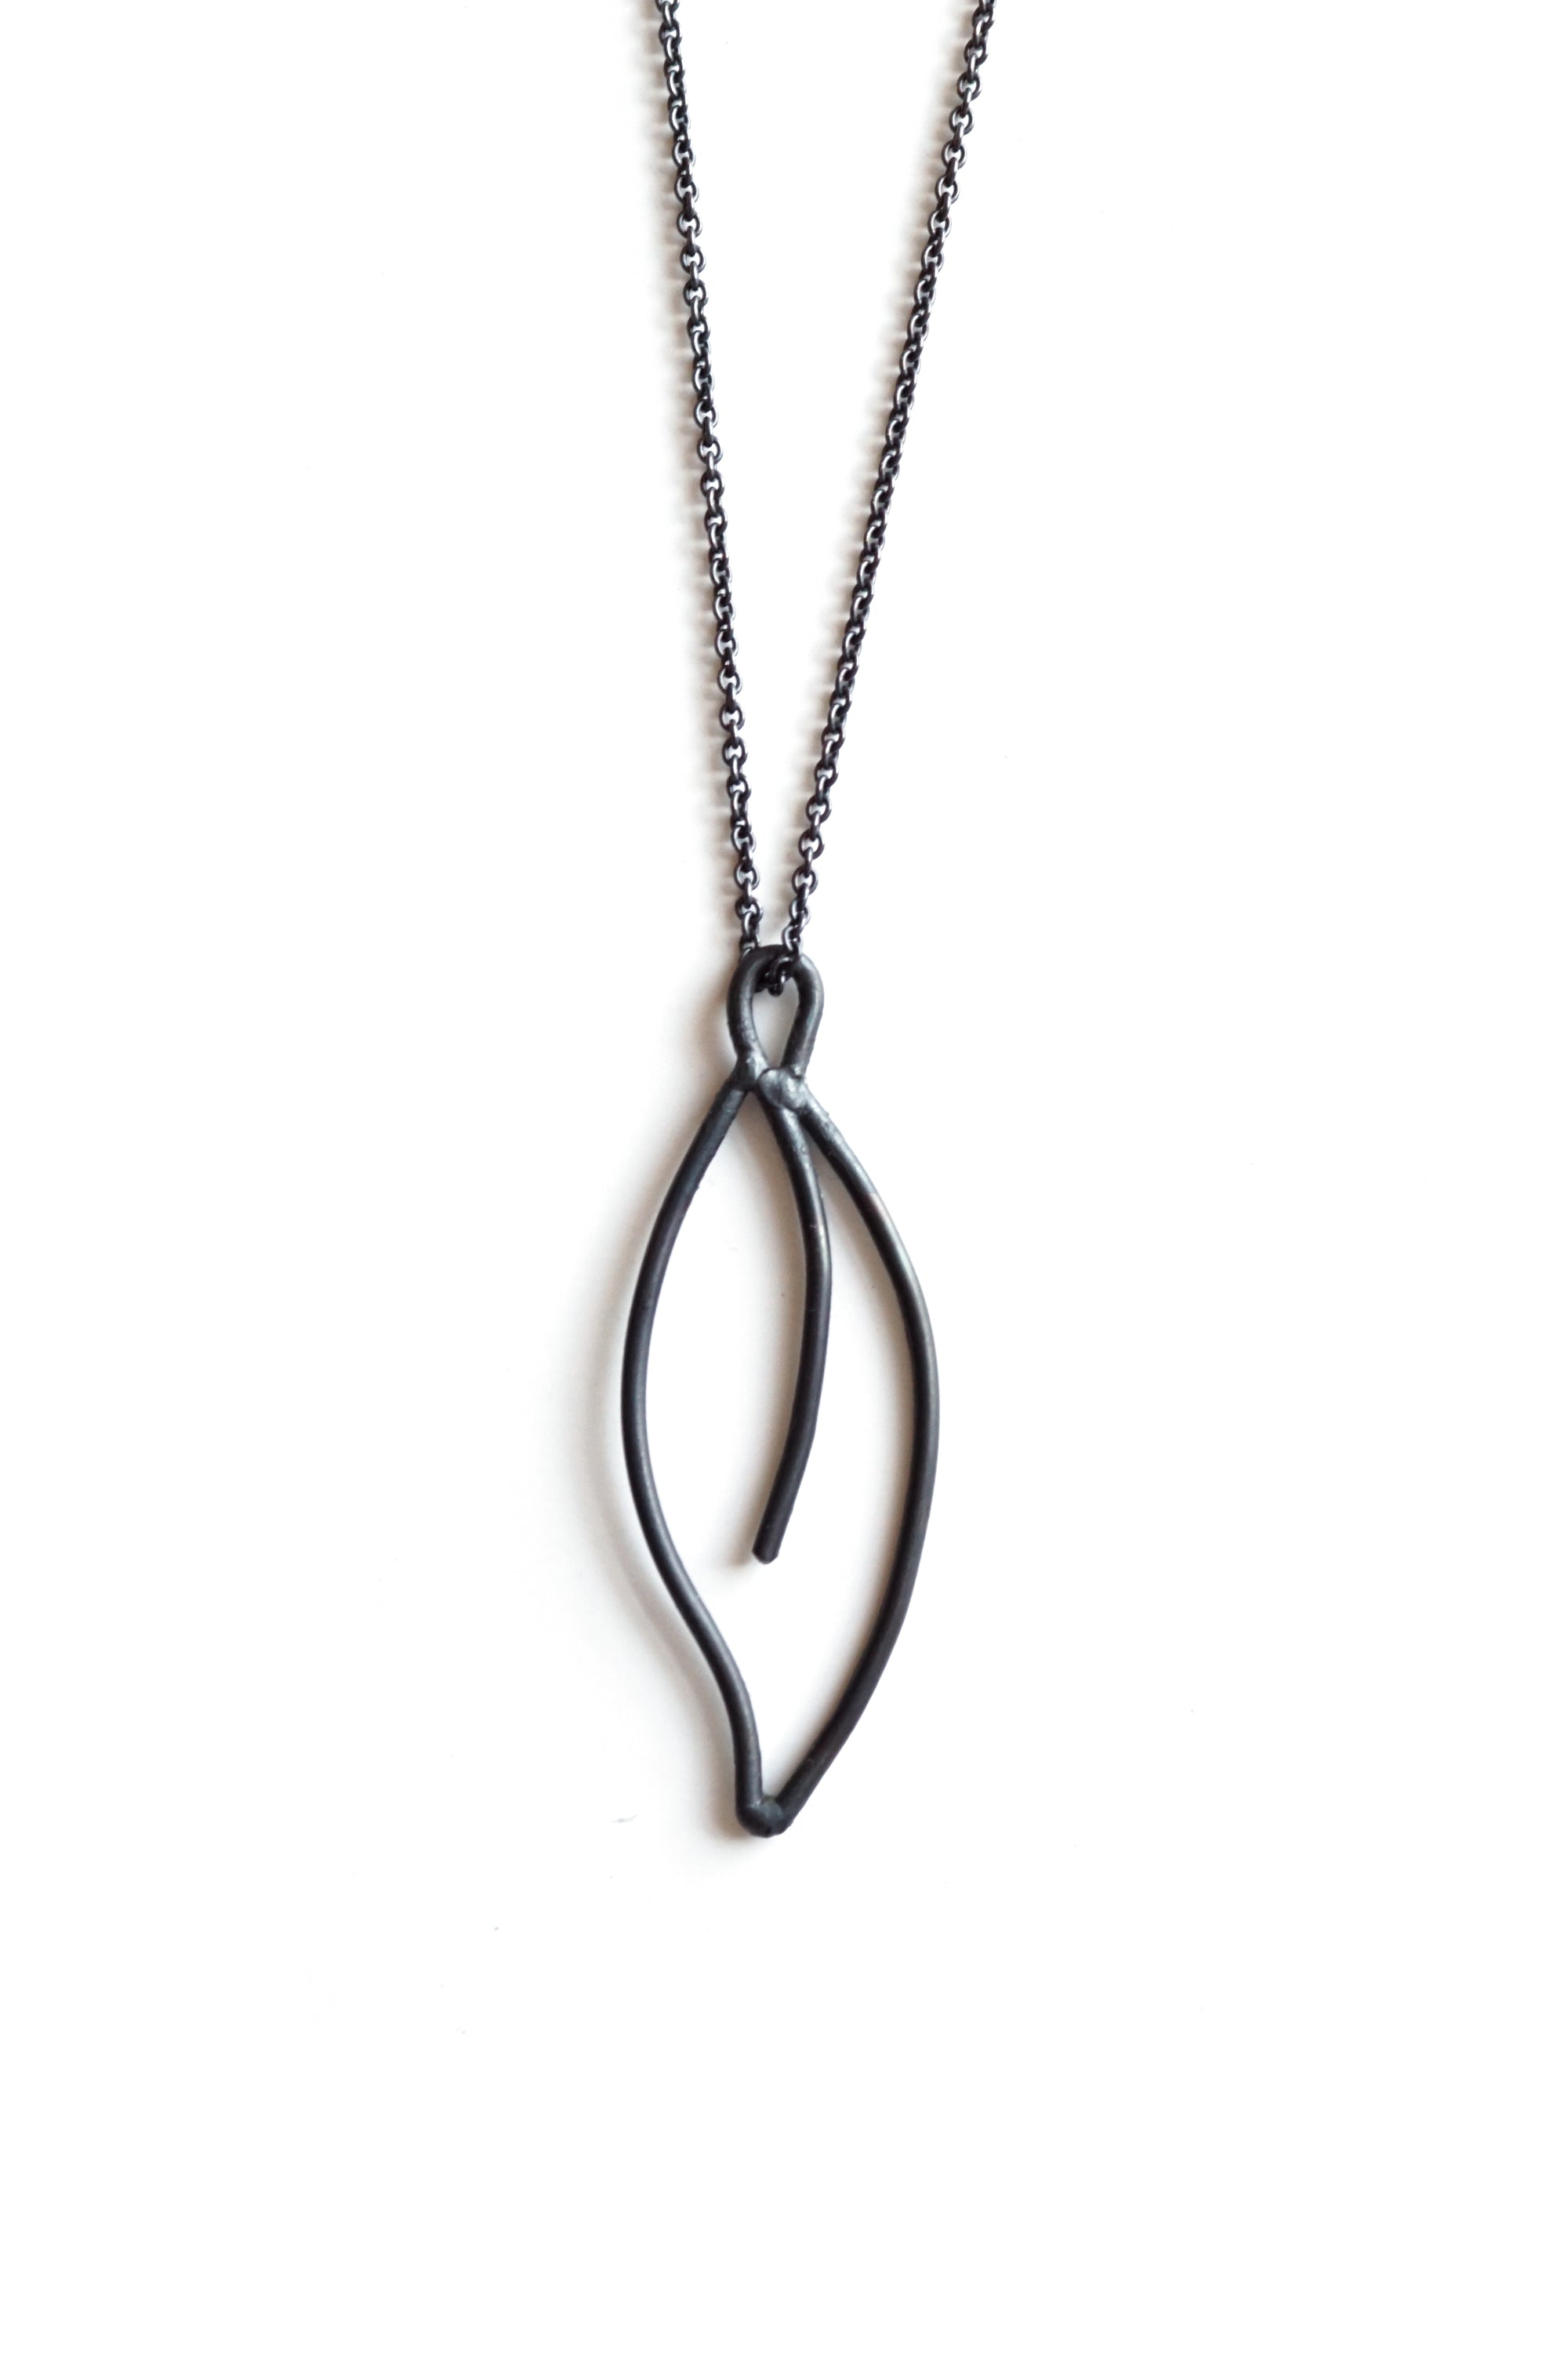 Replier Necklace in black steel, silver, or bronze